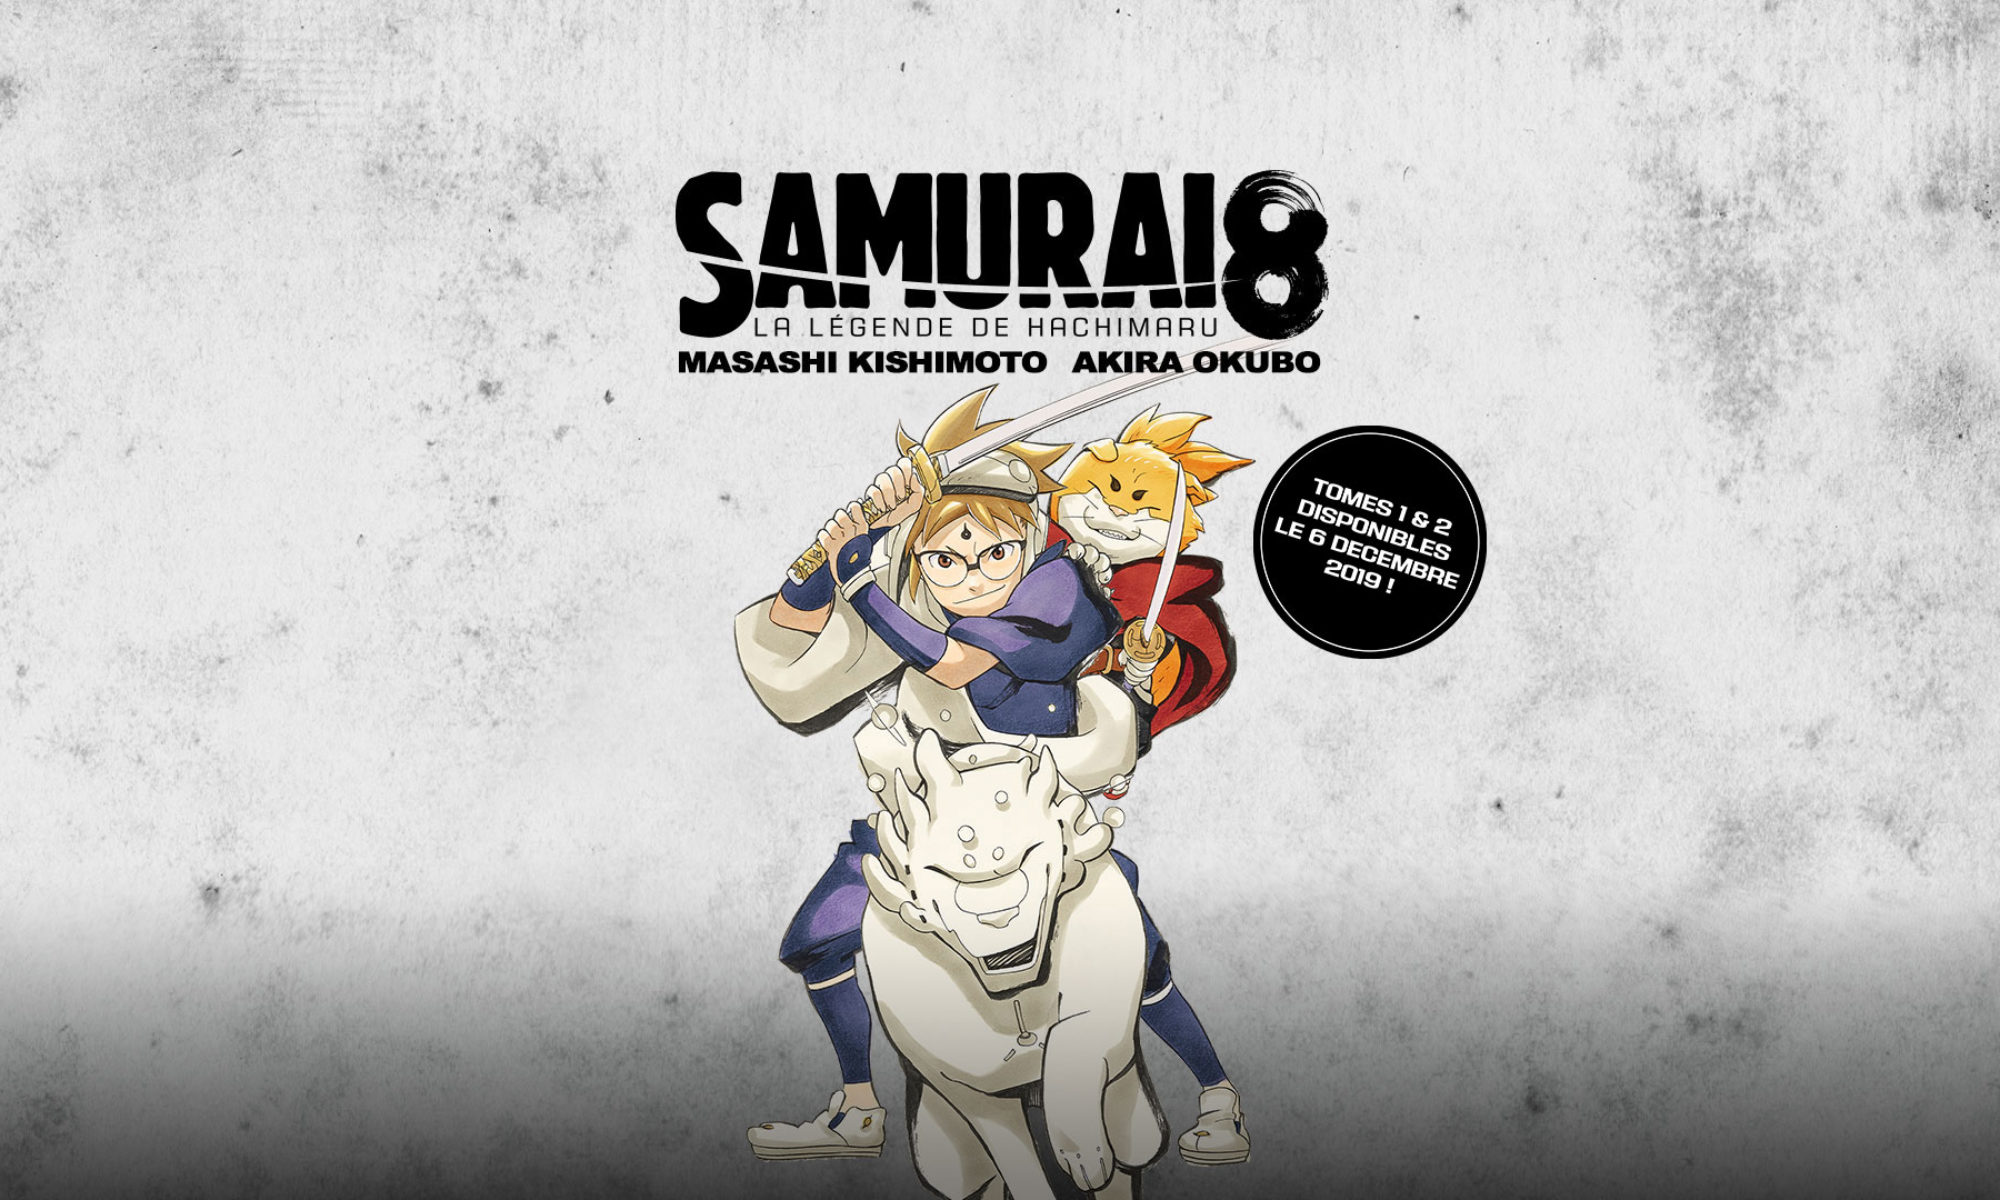 Samurai 8 ! Le Nouveau Manga de Masashi Kishimoto aux Editions Kana !